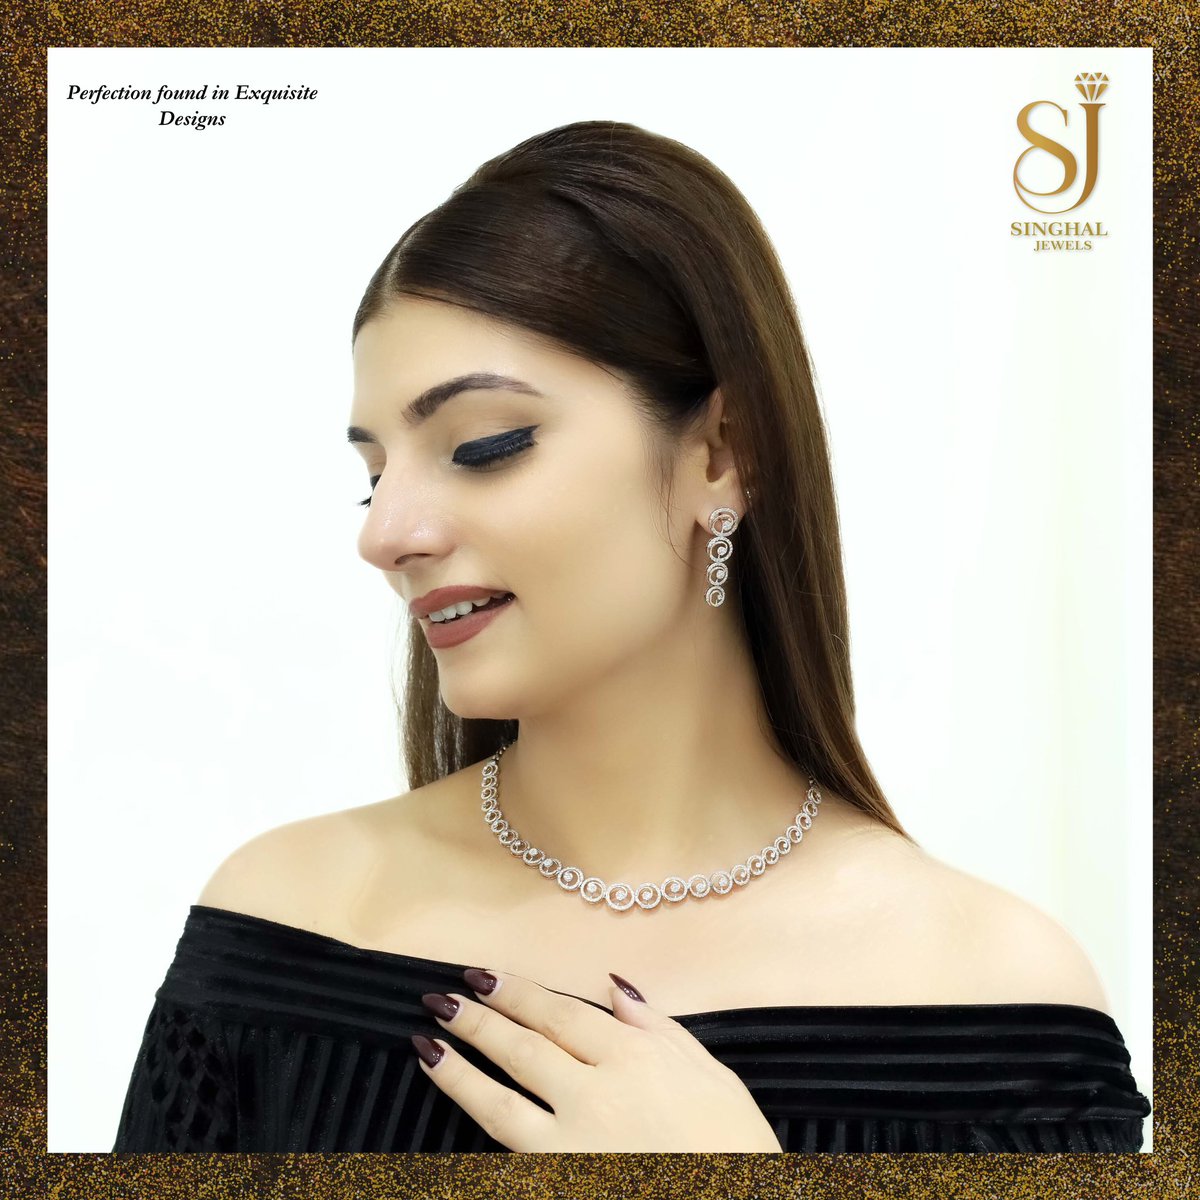 Perfection found in Exquisite Designs💎
.
.
#trending #viral #tweet #x #diamonds #diamondjewelry #ring #jewels #singhal #women #neckalce #jewellerydesign #diamondnecklace #navratri #festival